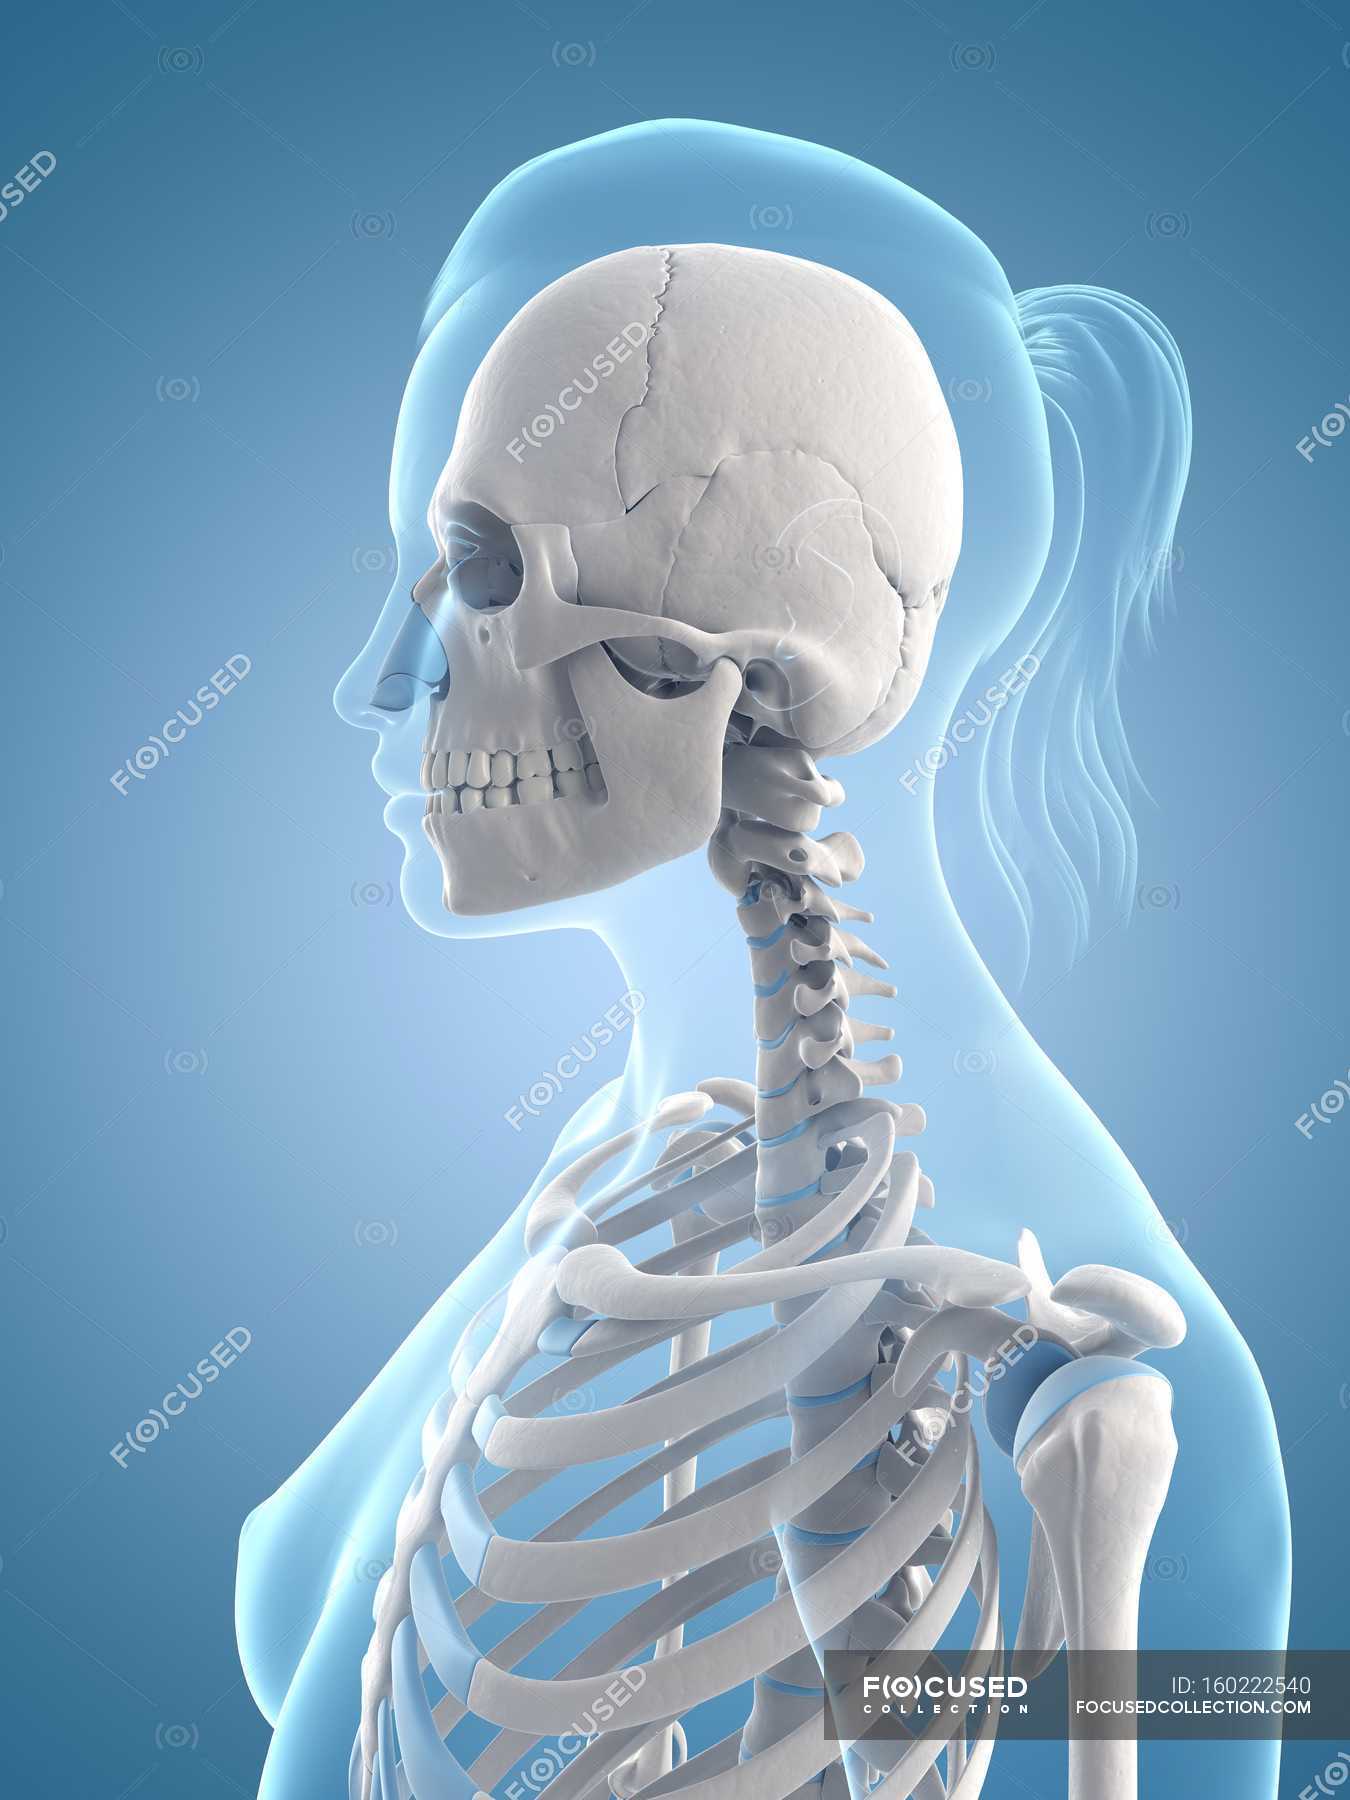 Upper-body skeletal system — side view, artwork - Stock Photo | #160222540